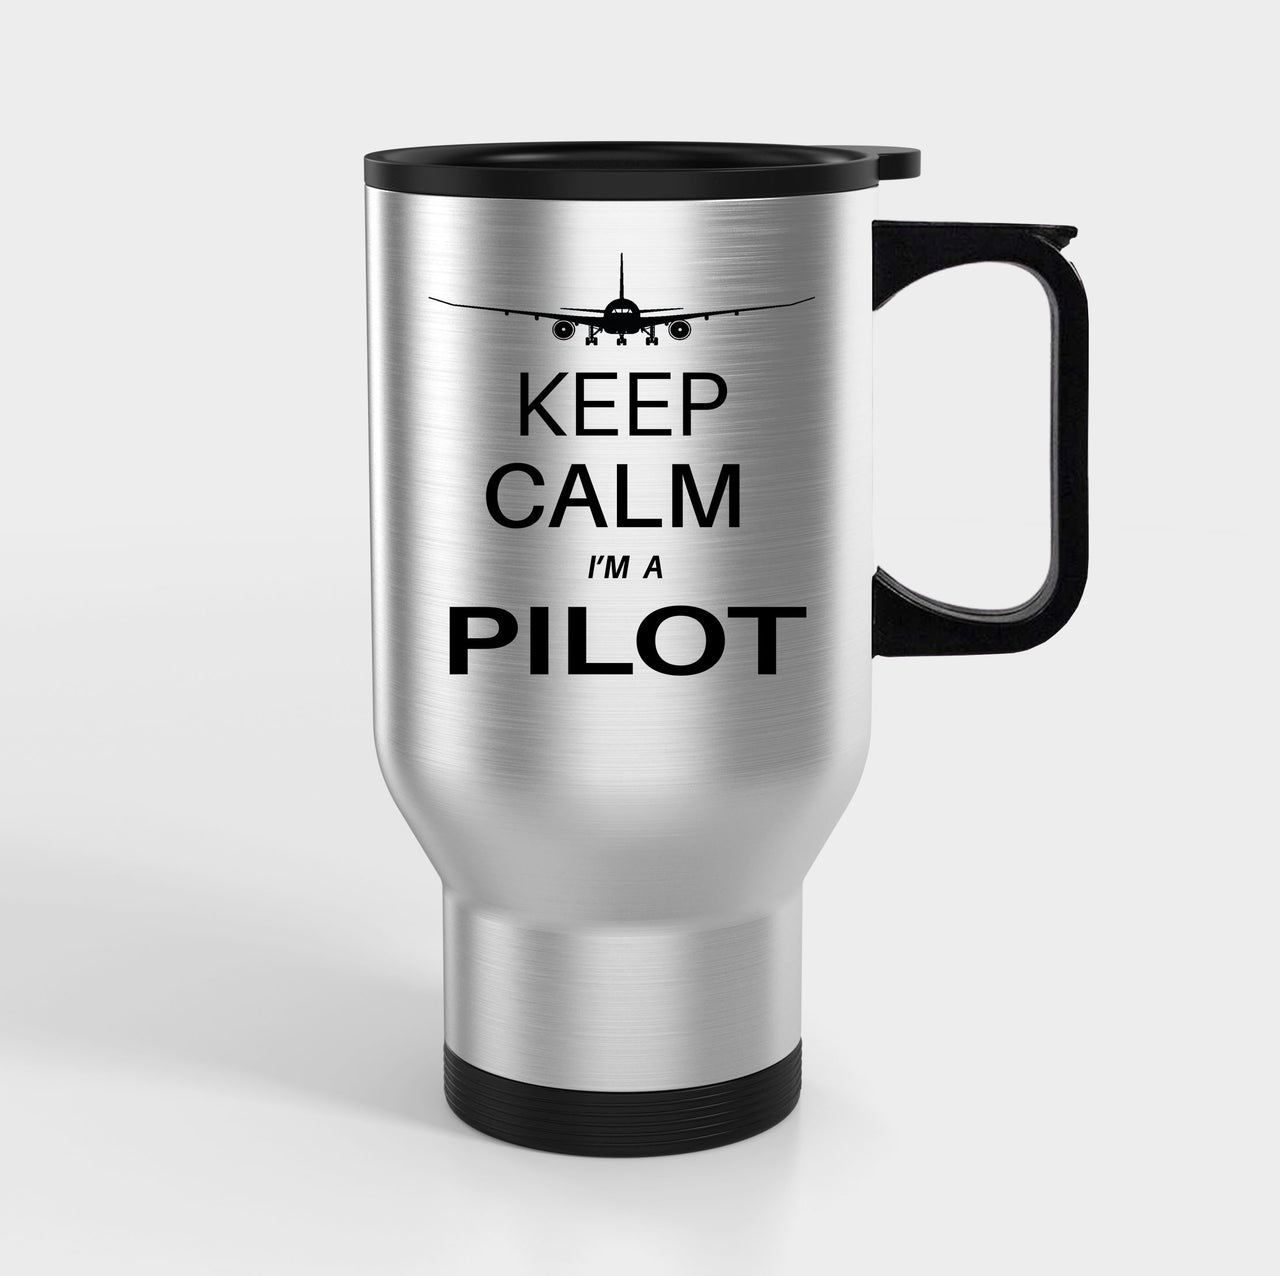 Pilot (777 Silhouette) Designed Travel Mugs (With Holder)